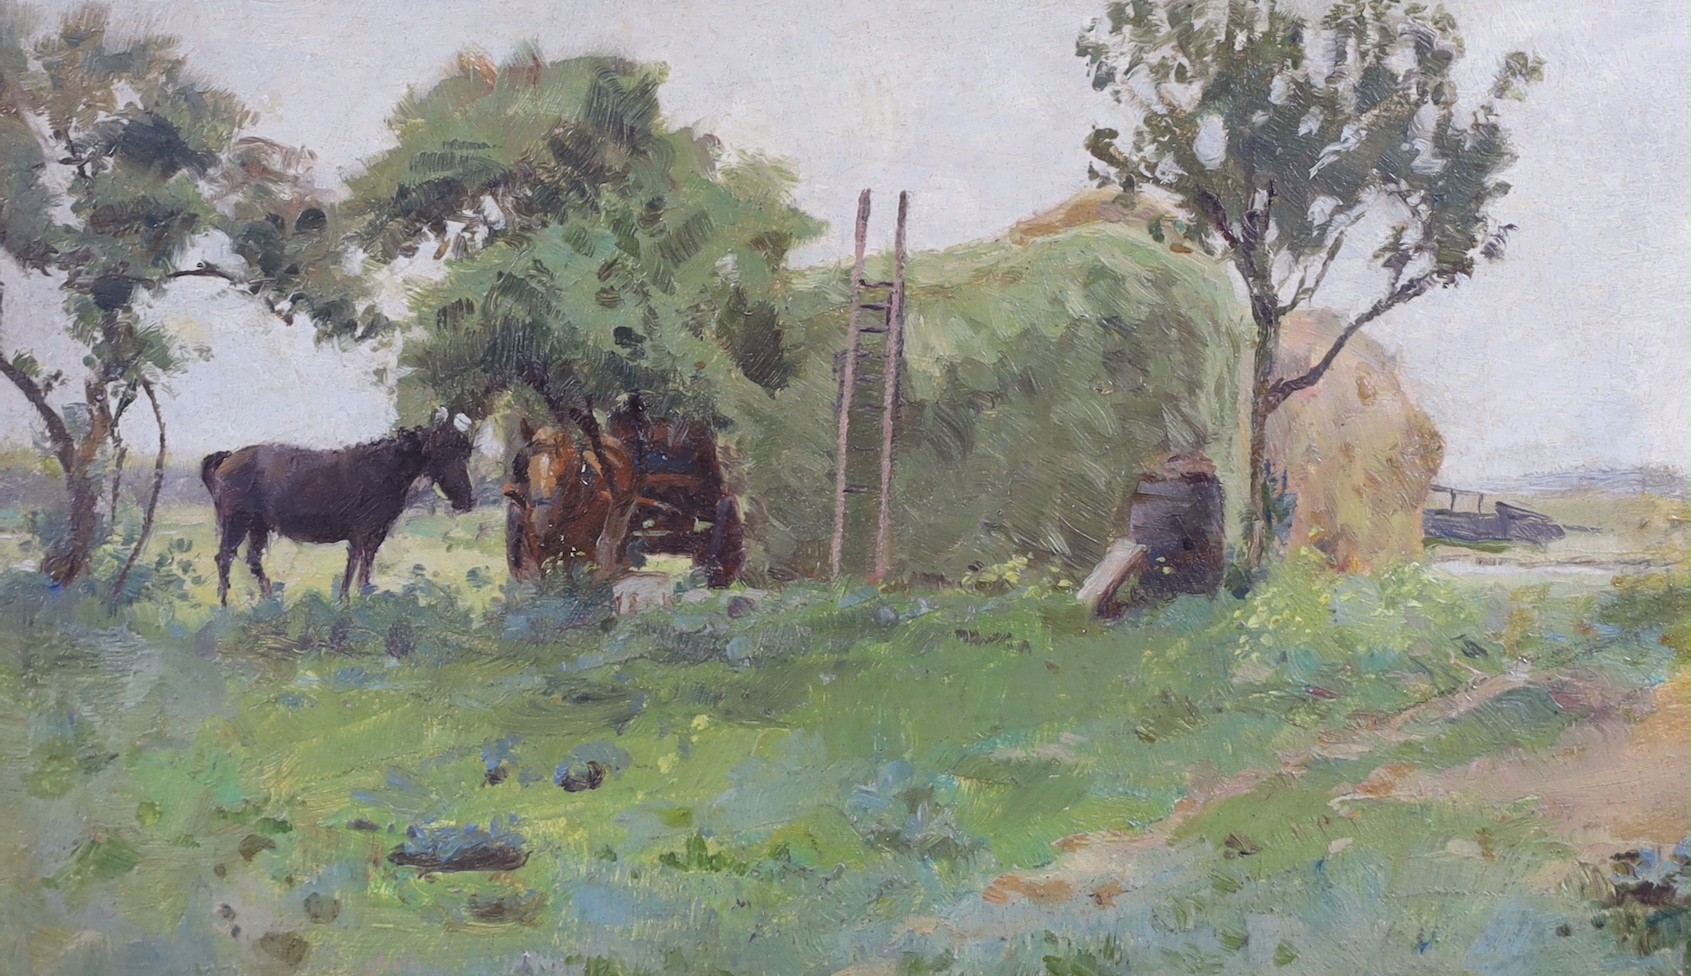 Percy Tarrant (1855-1934), oil on board, Horses beside a haystack, inscribed verso, 13 x 22cm